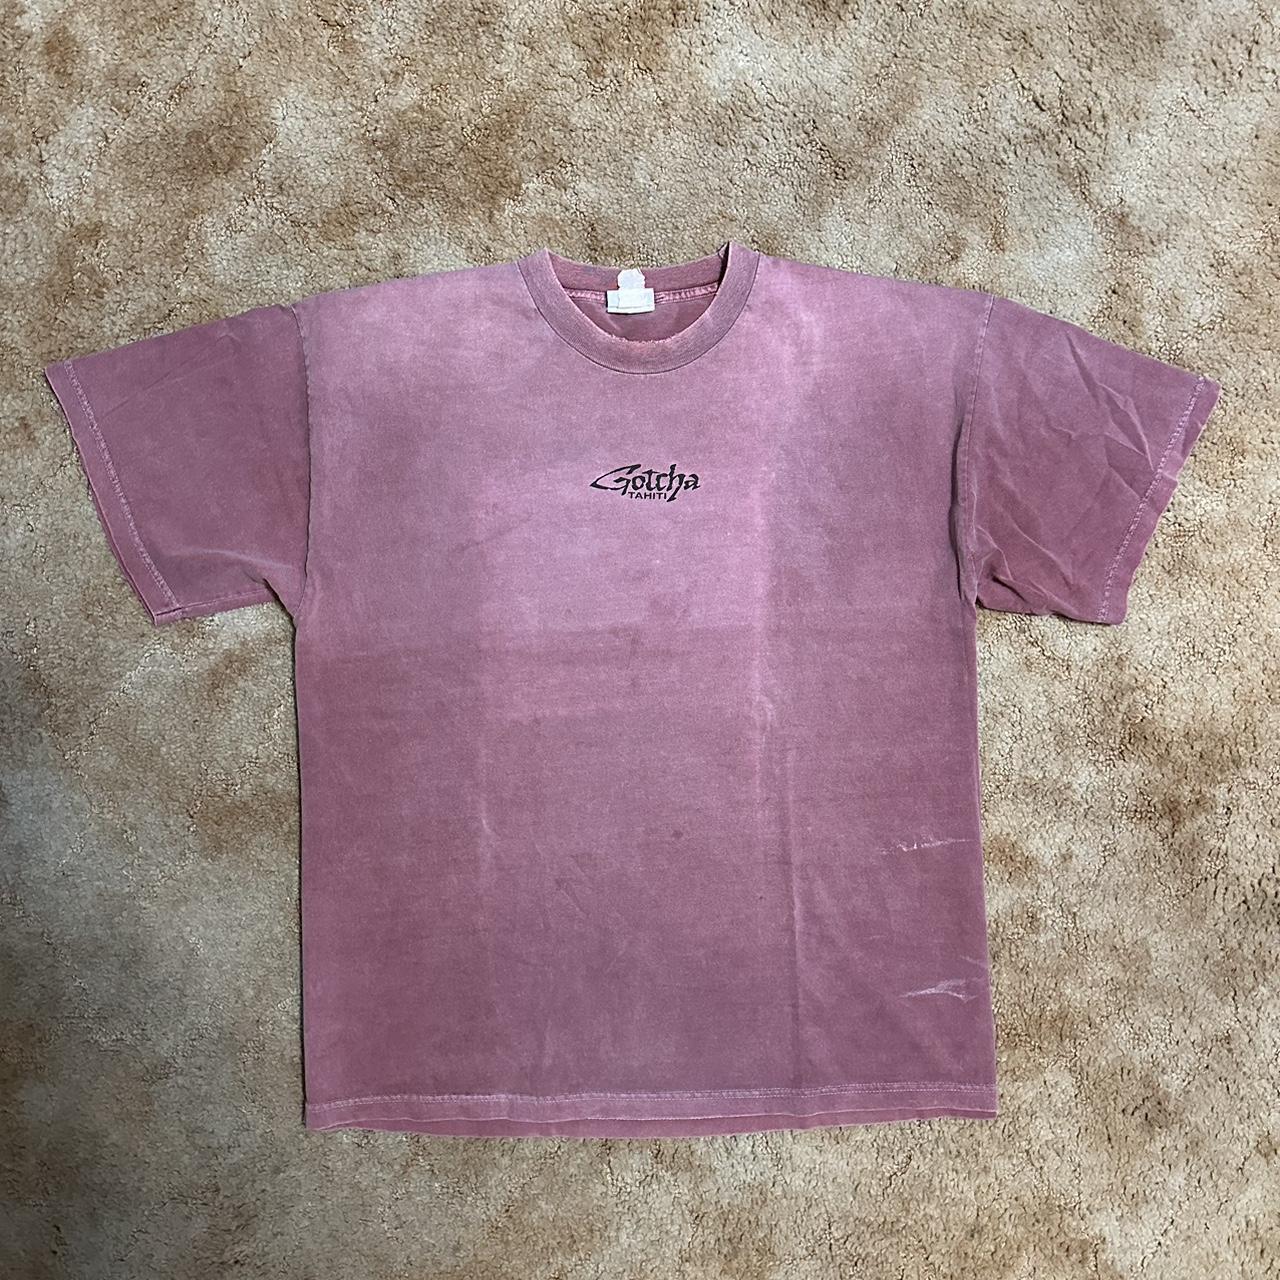 Gotcha Men's Burgundy and Purple T-shirt | Depop